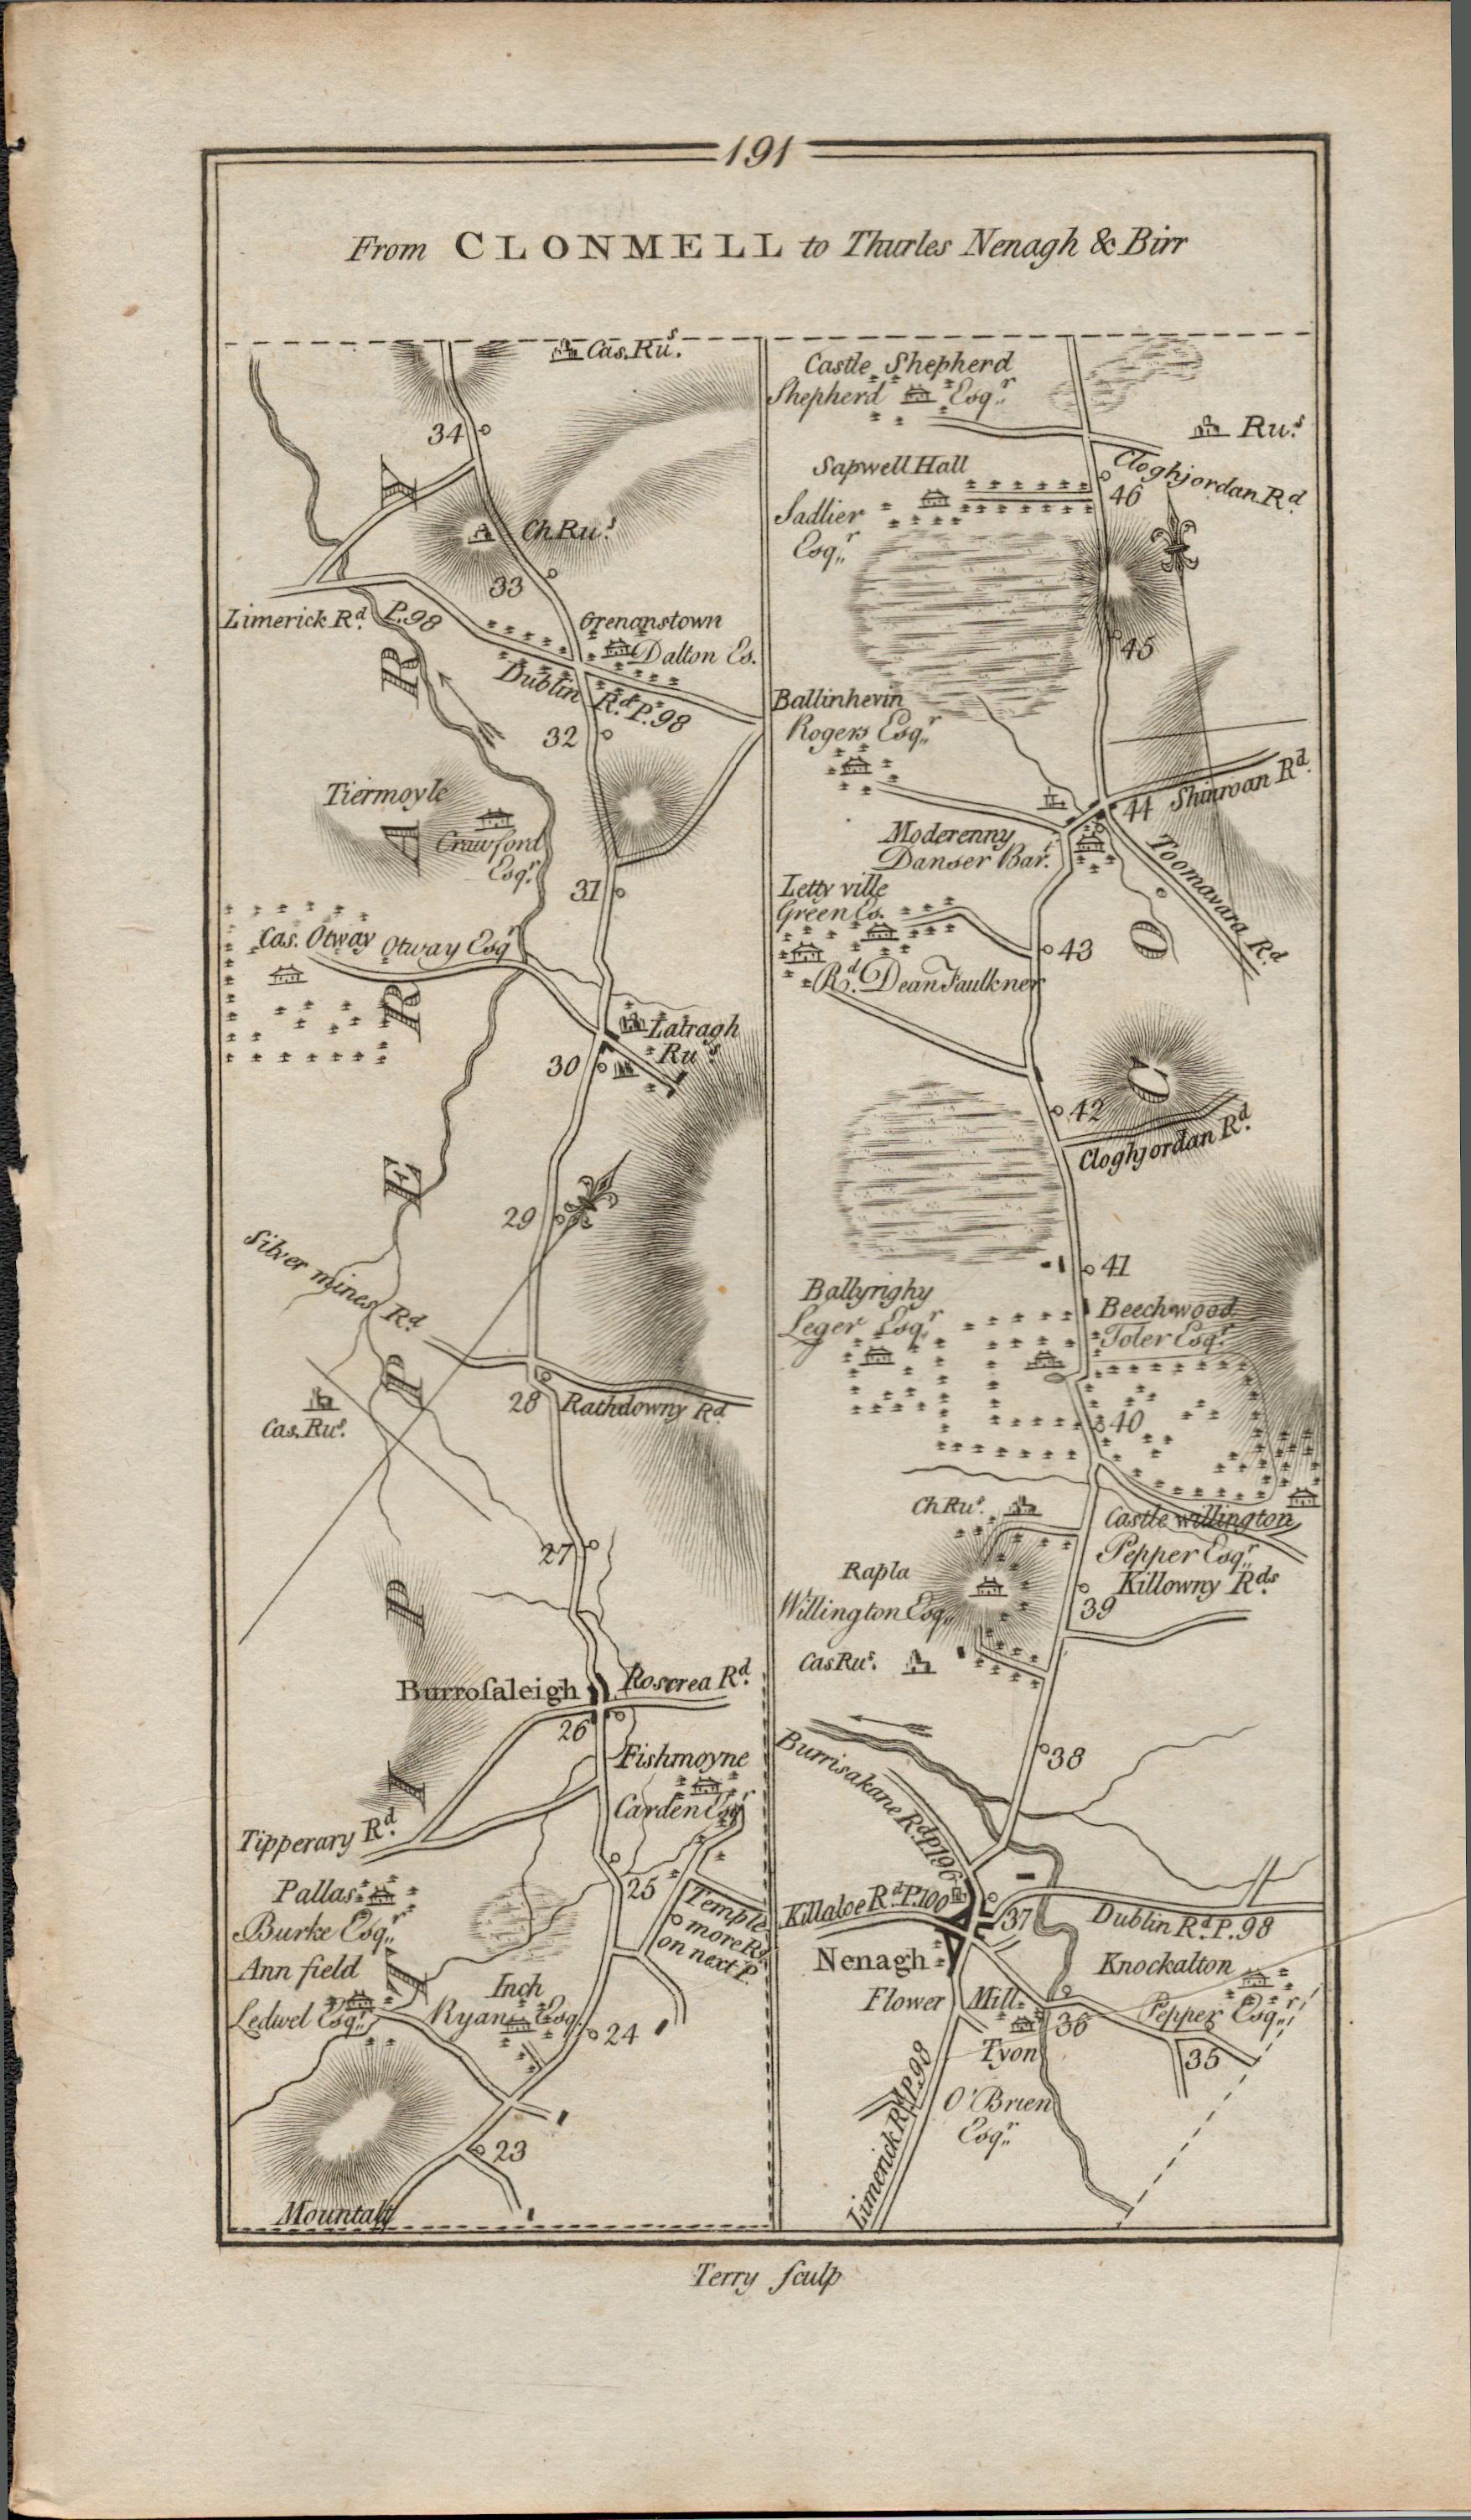 Taylor & Skinner 1777 Ireland Map Tipperary Nenagh Templemore Birr.